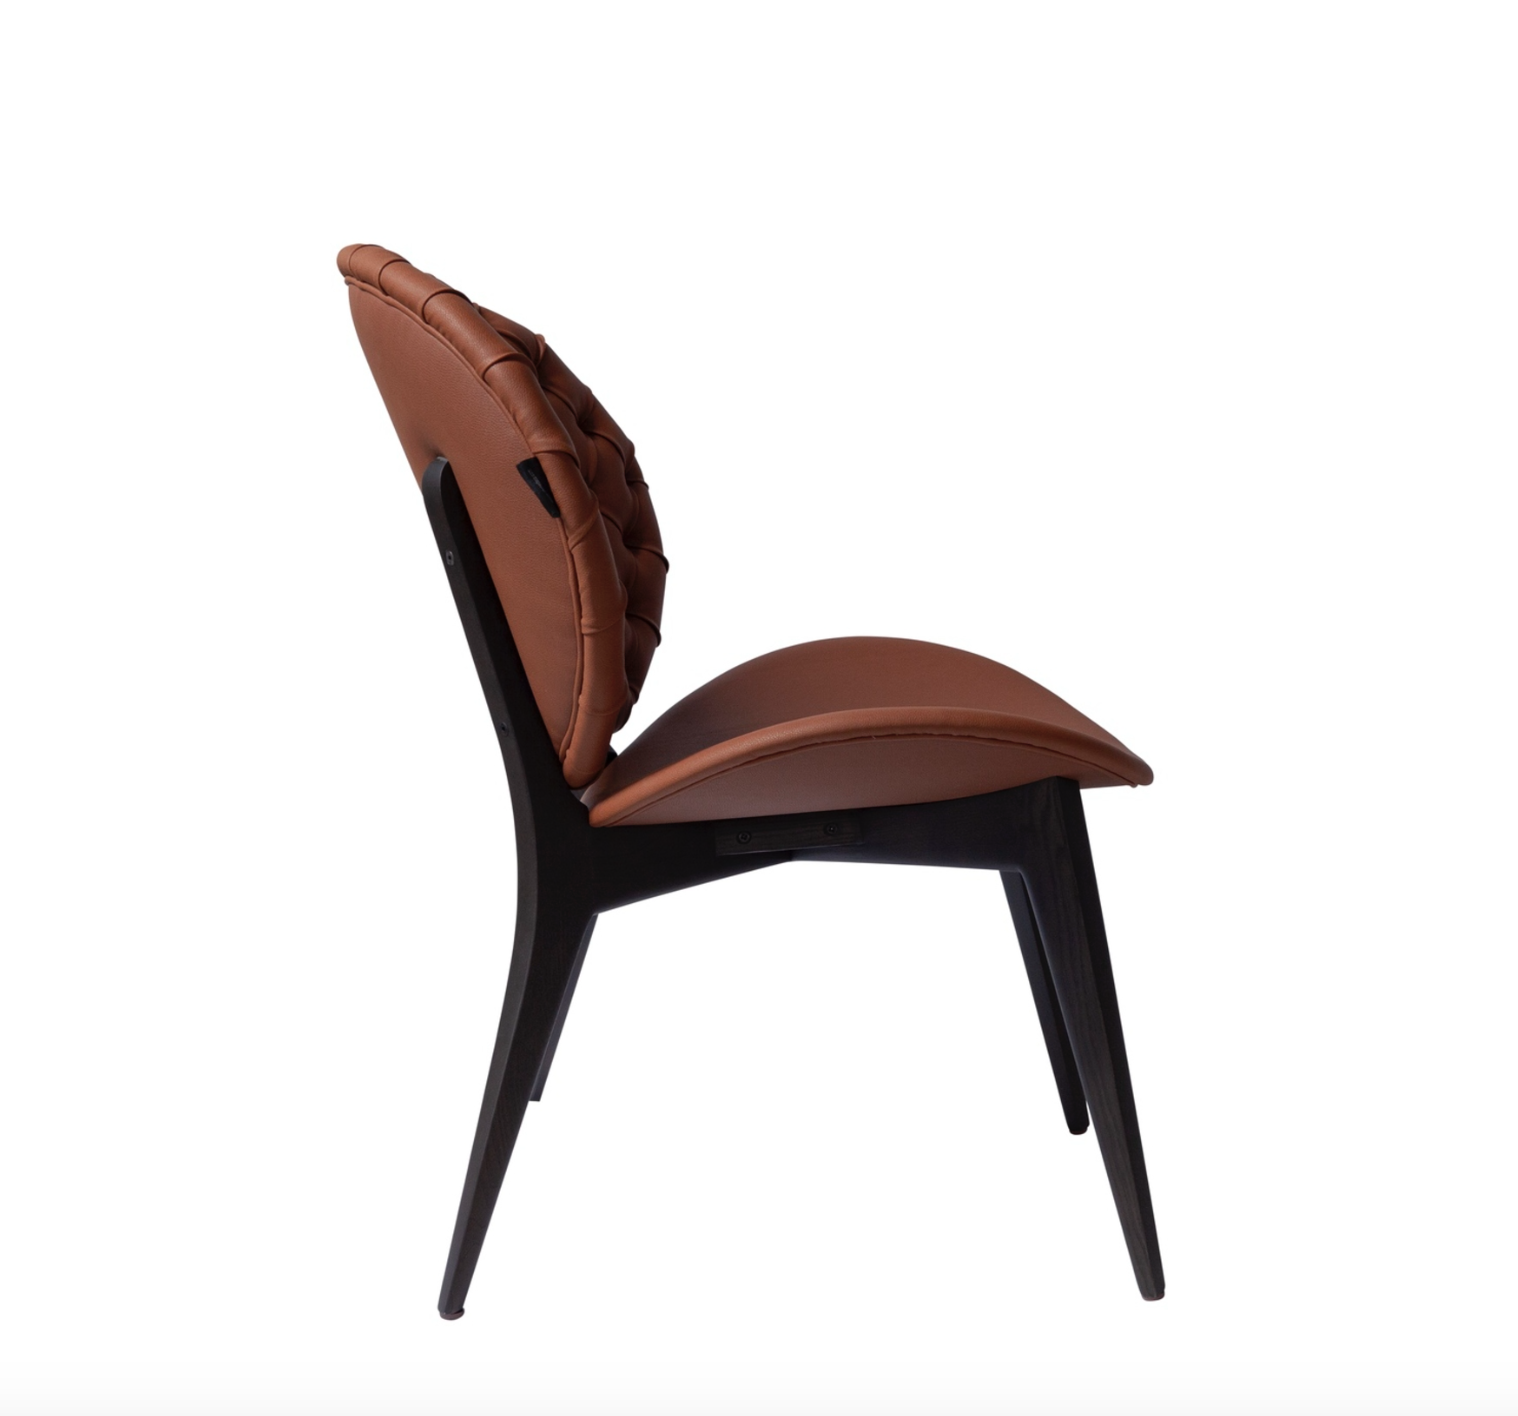 Design chair Milano - H83 cm